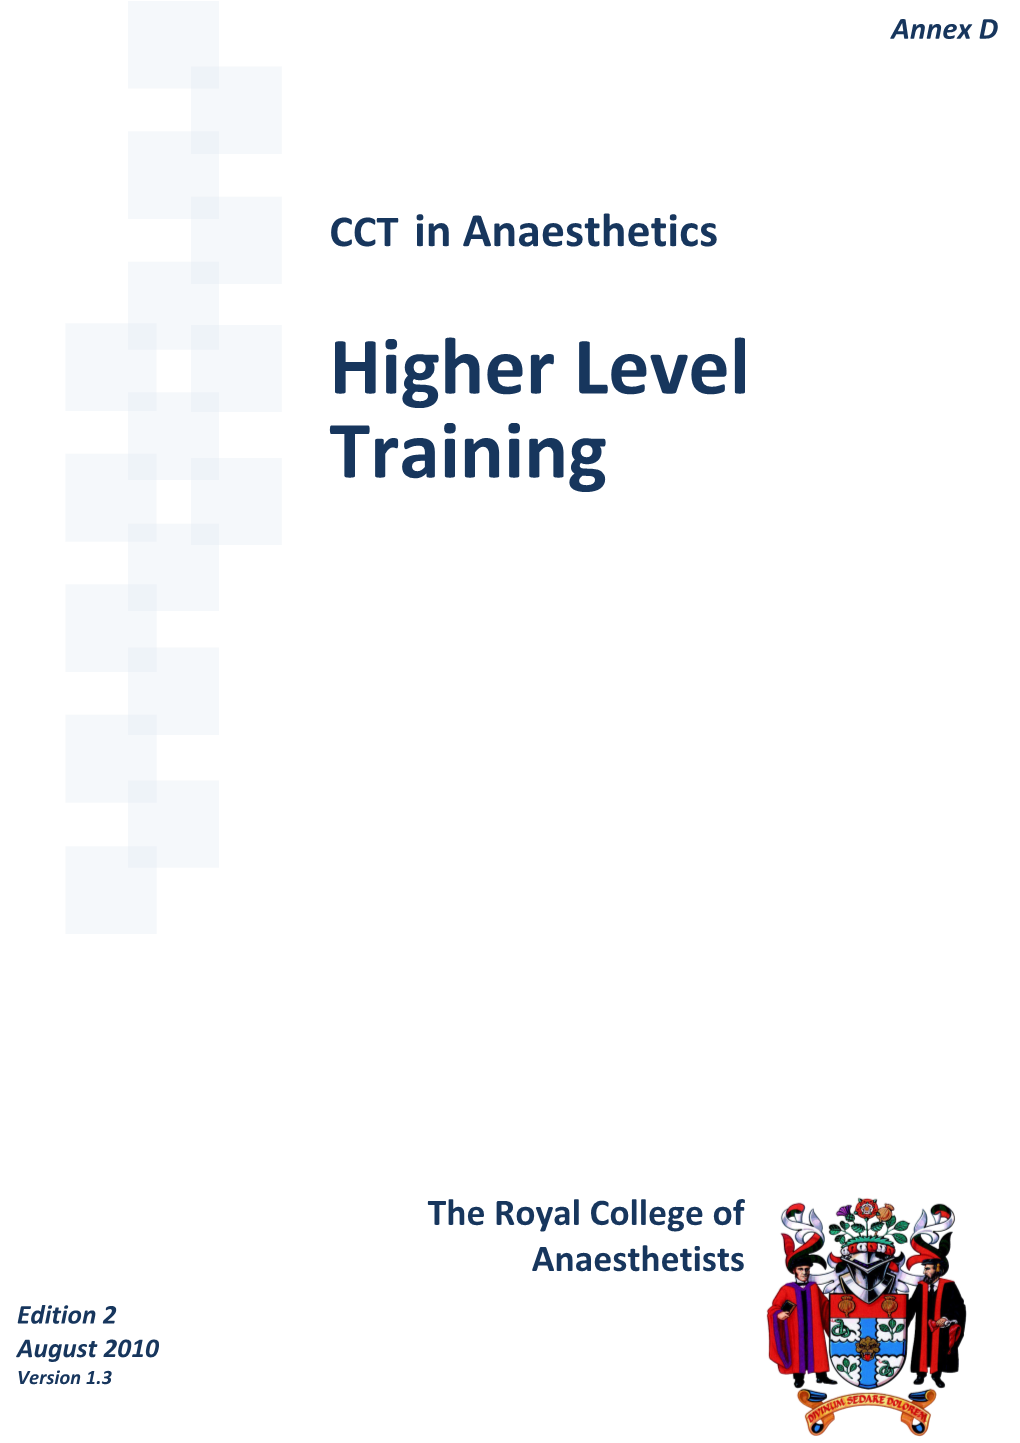 CCT in Anaesthetics